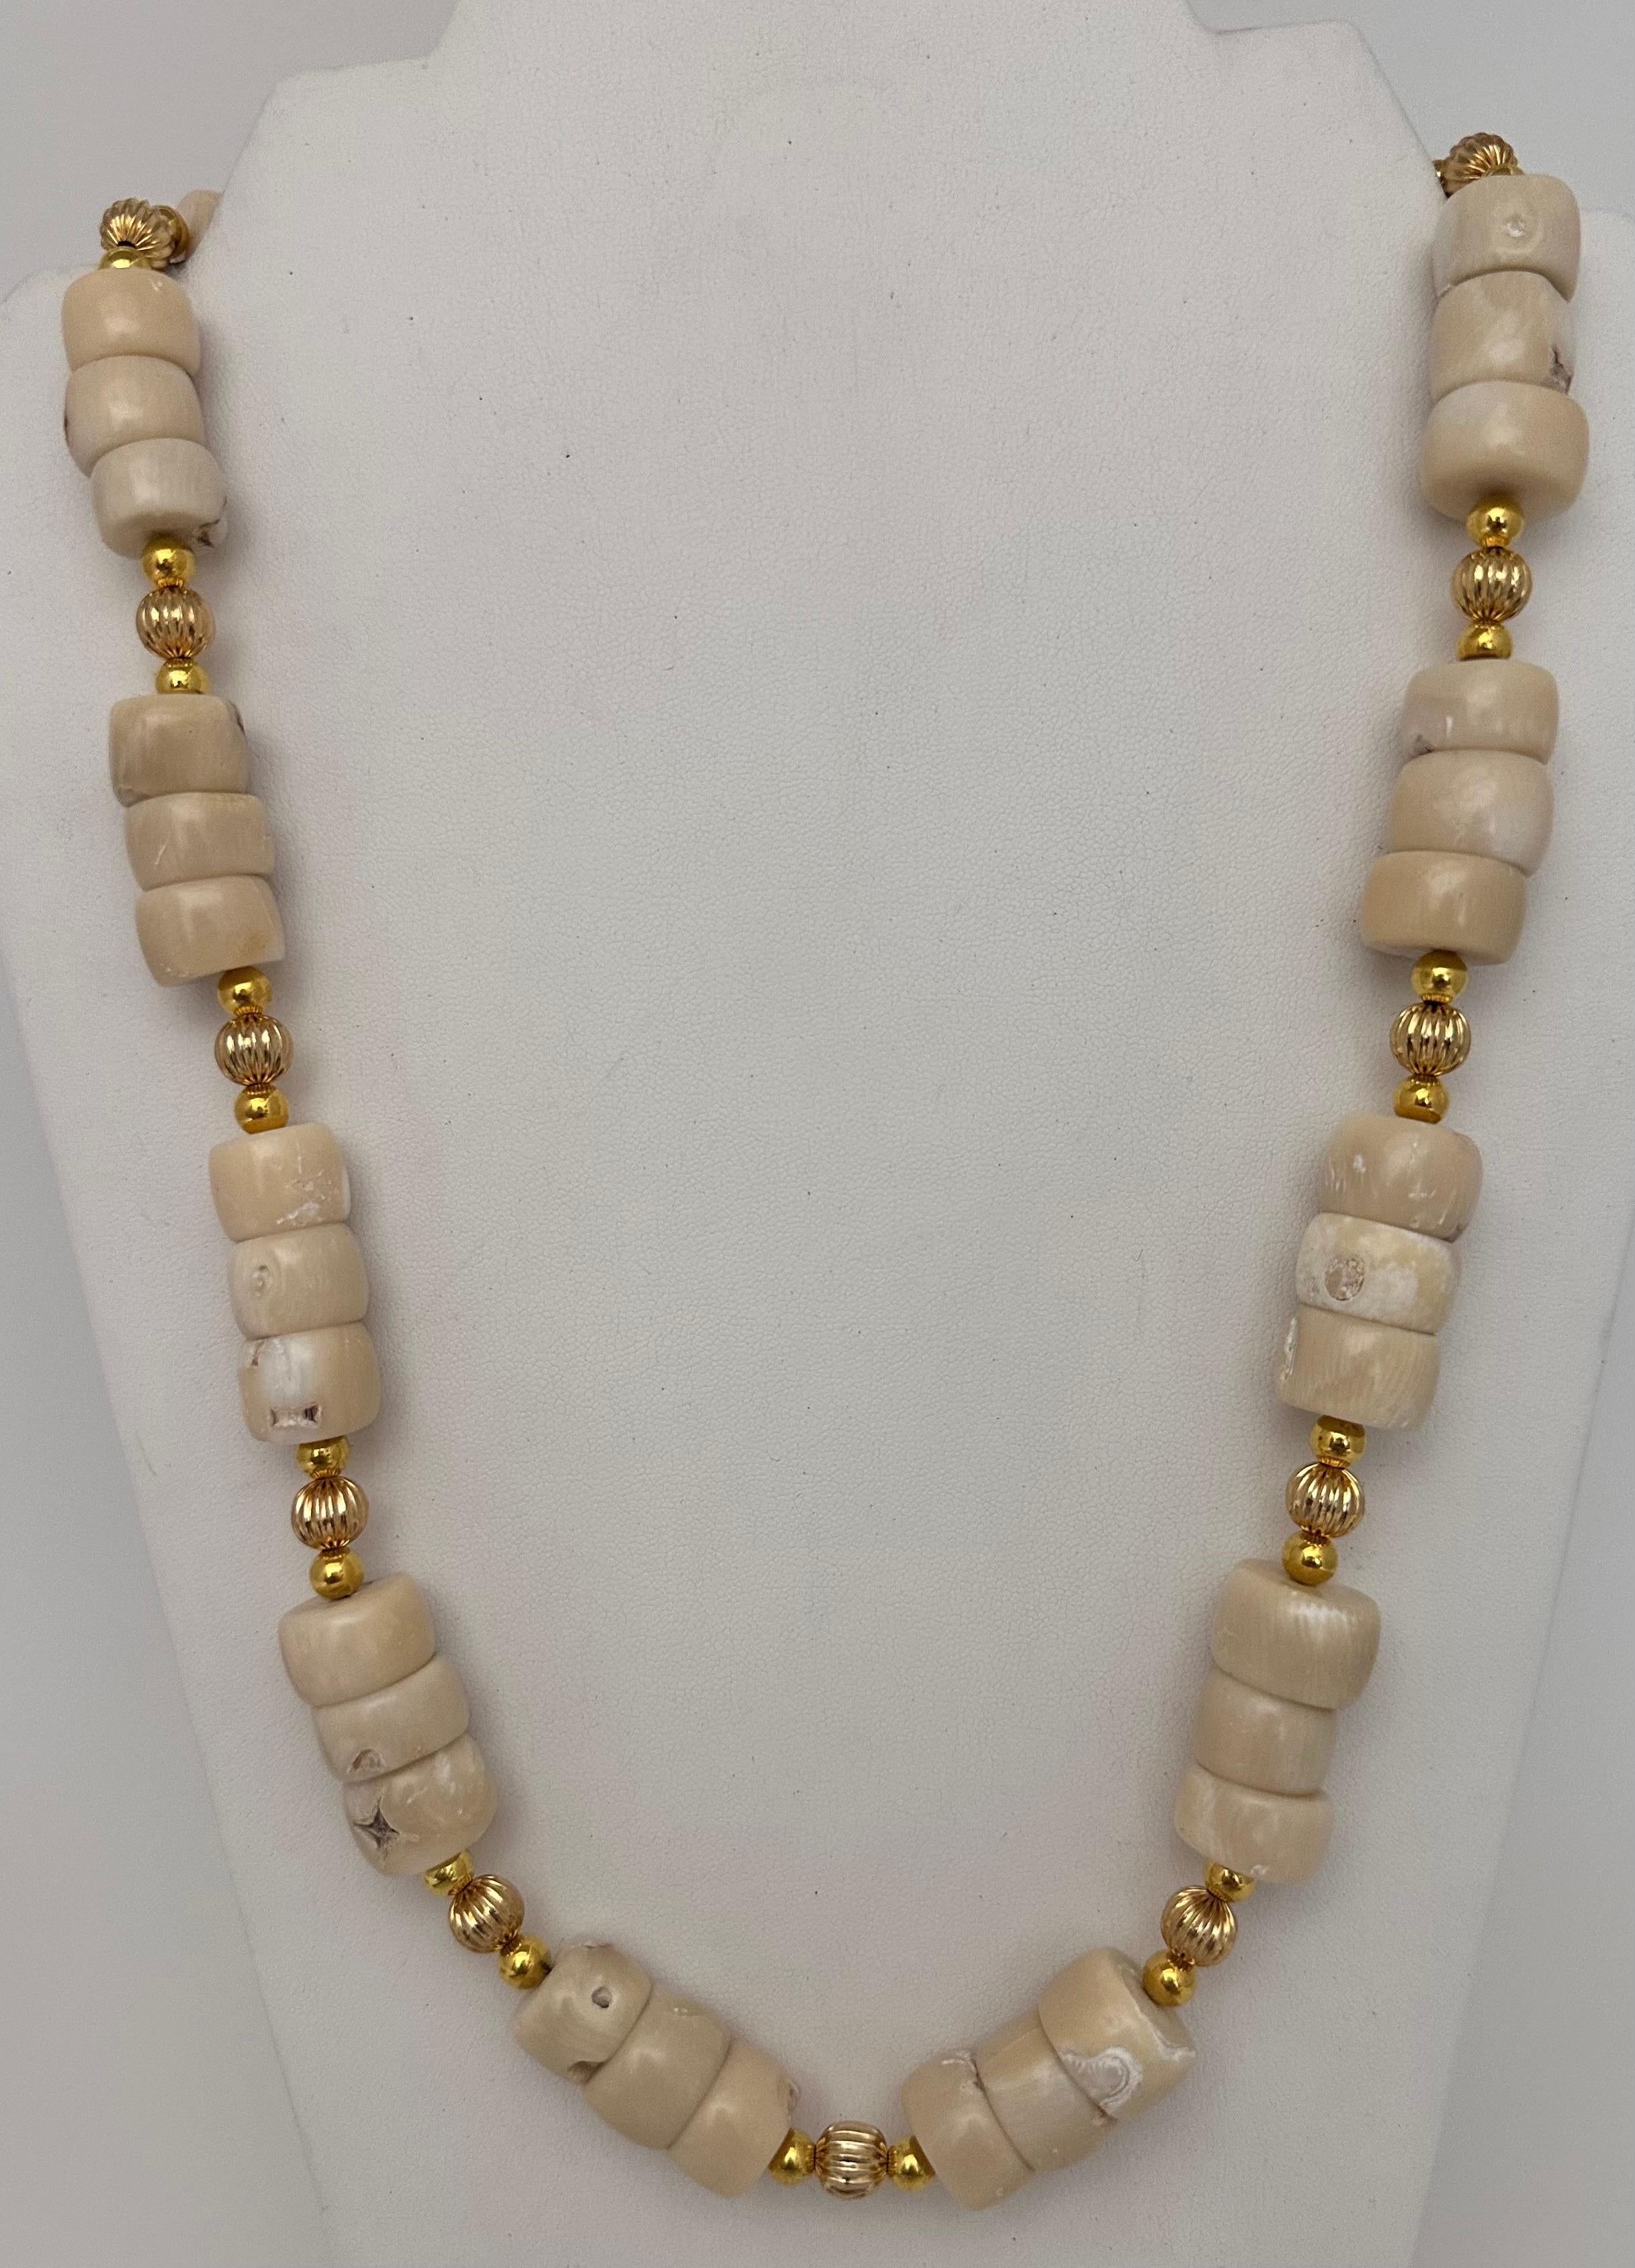 Handgefertigte vergoldete Perlen & weiße Korallenperlen in Fassform Perlen 26